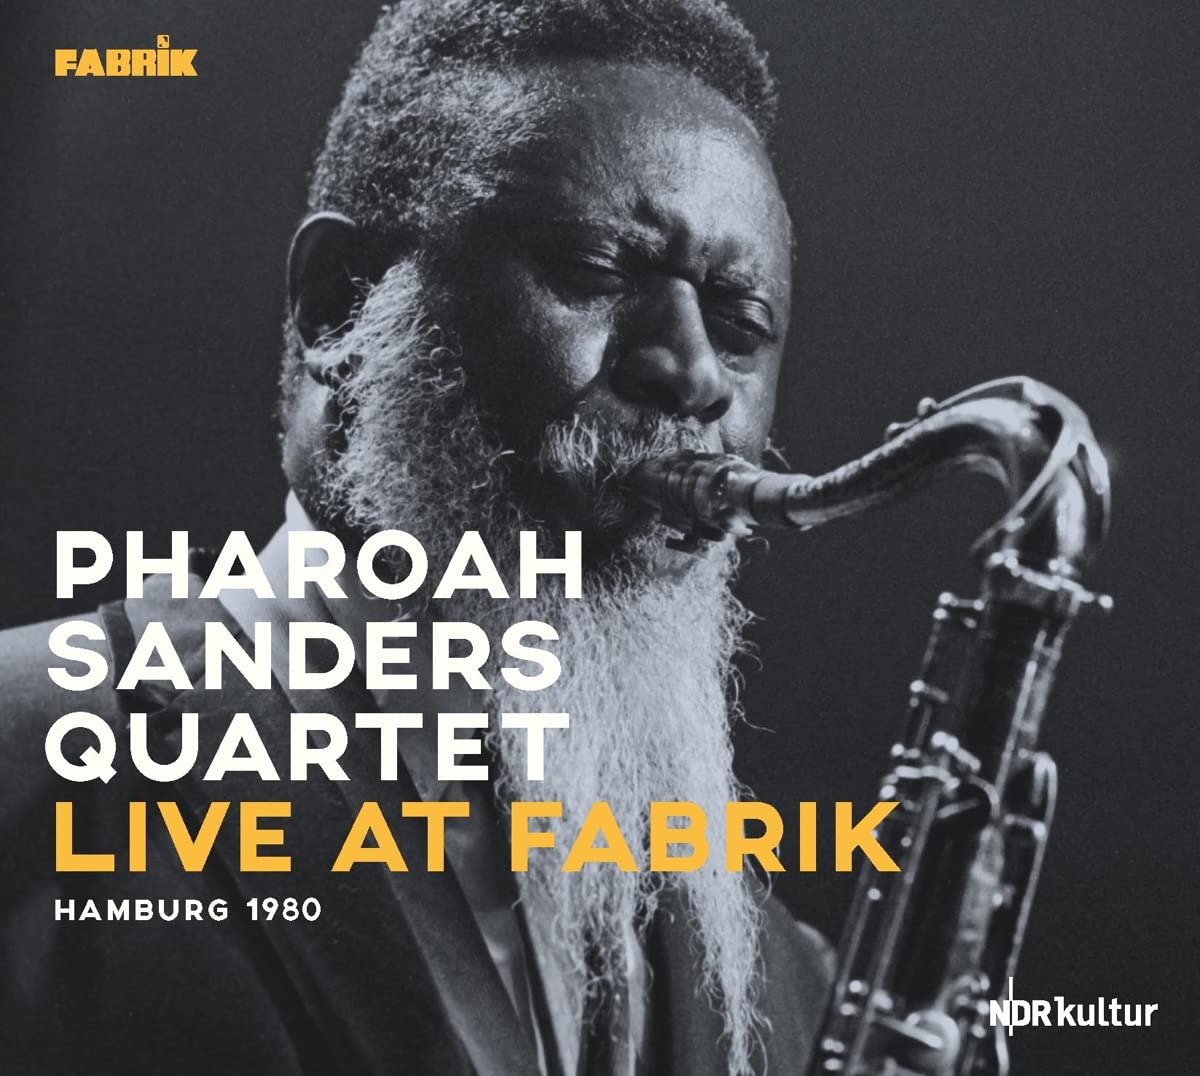 PHAROAH SANDERS - Pharoah Sanders Quartet : Live at Fabrik Hamburg 1980 cover 